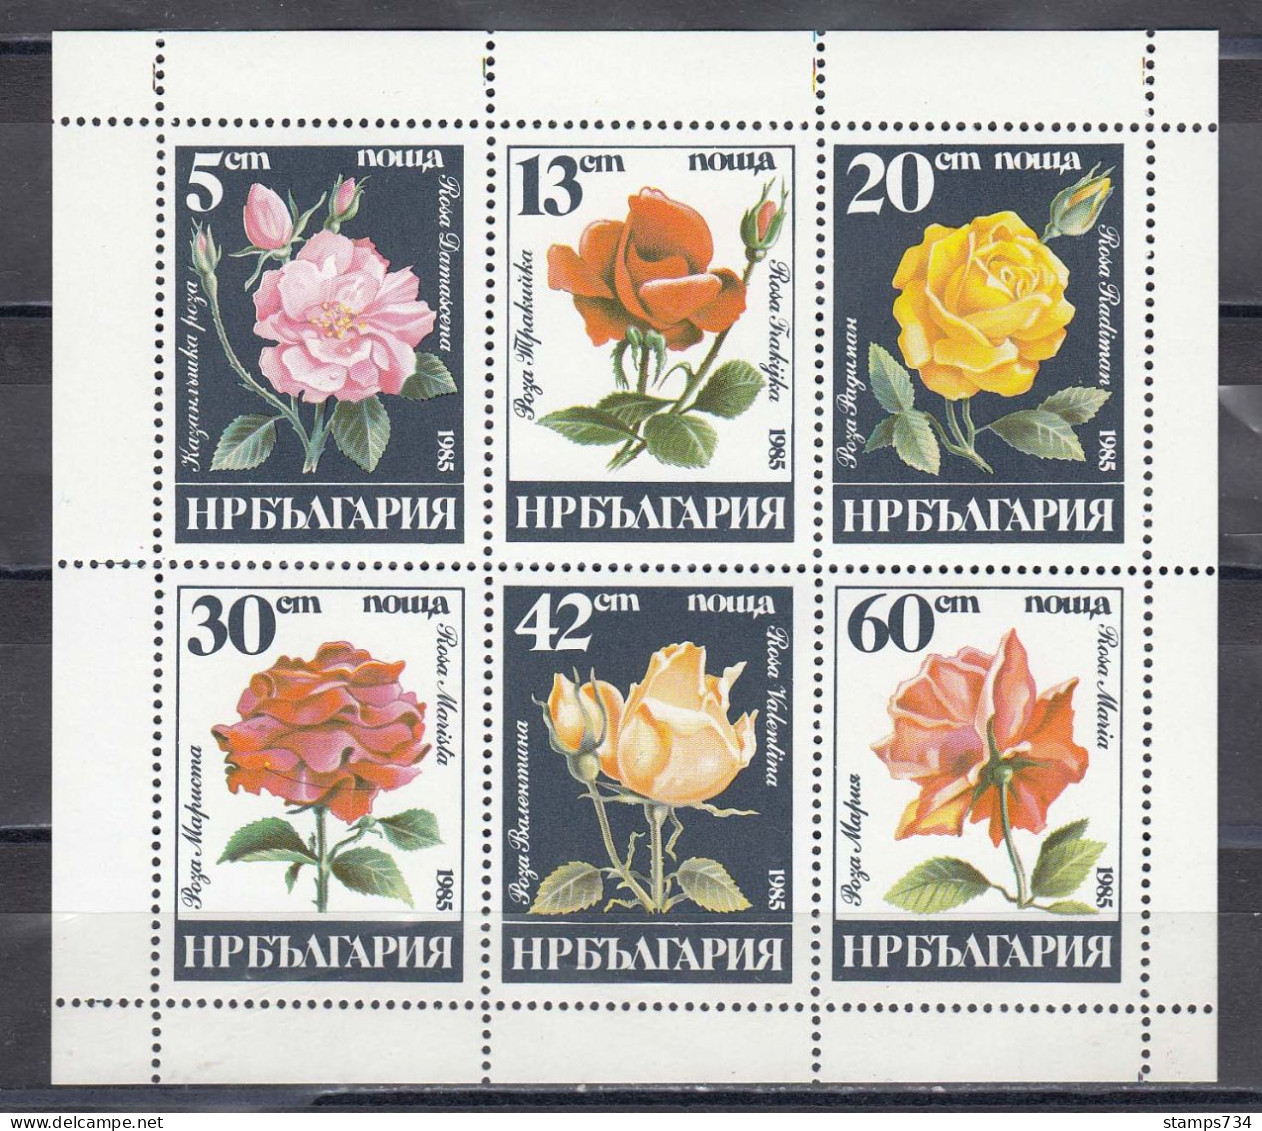 Bulgaria 1985 - Roses, Mi-Nr. 3373/78 In Sheet, MNH** - Unused Stamps